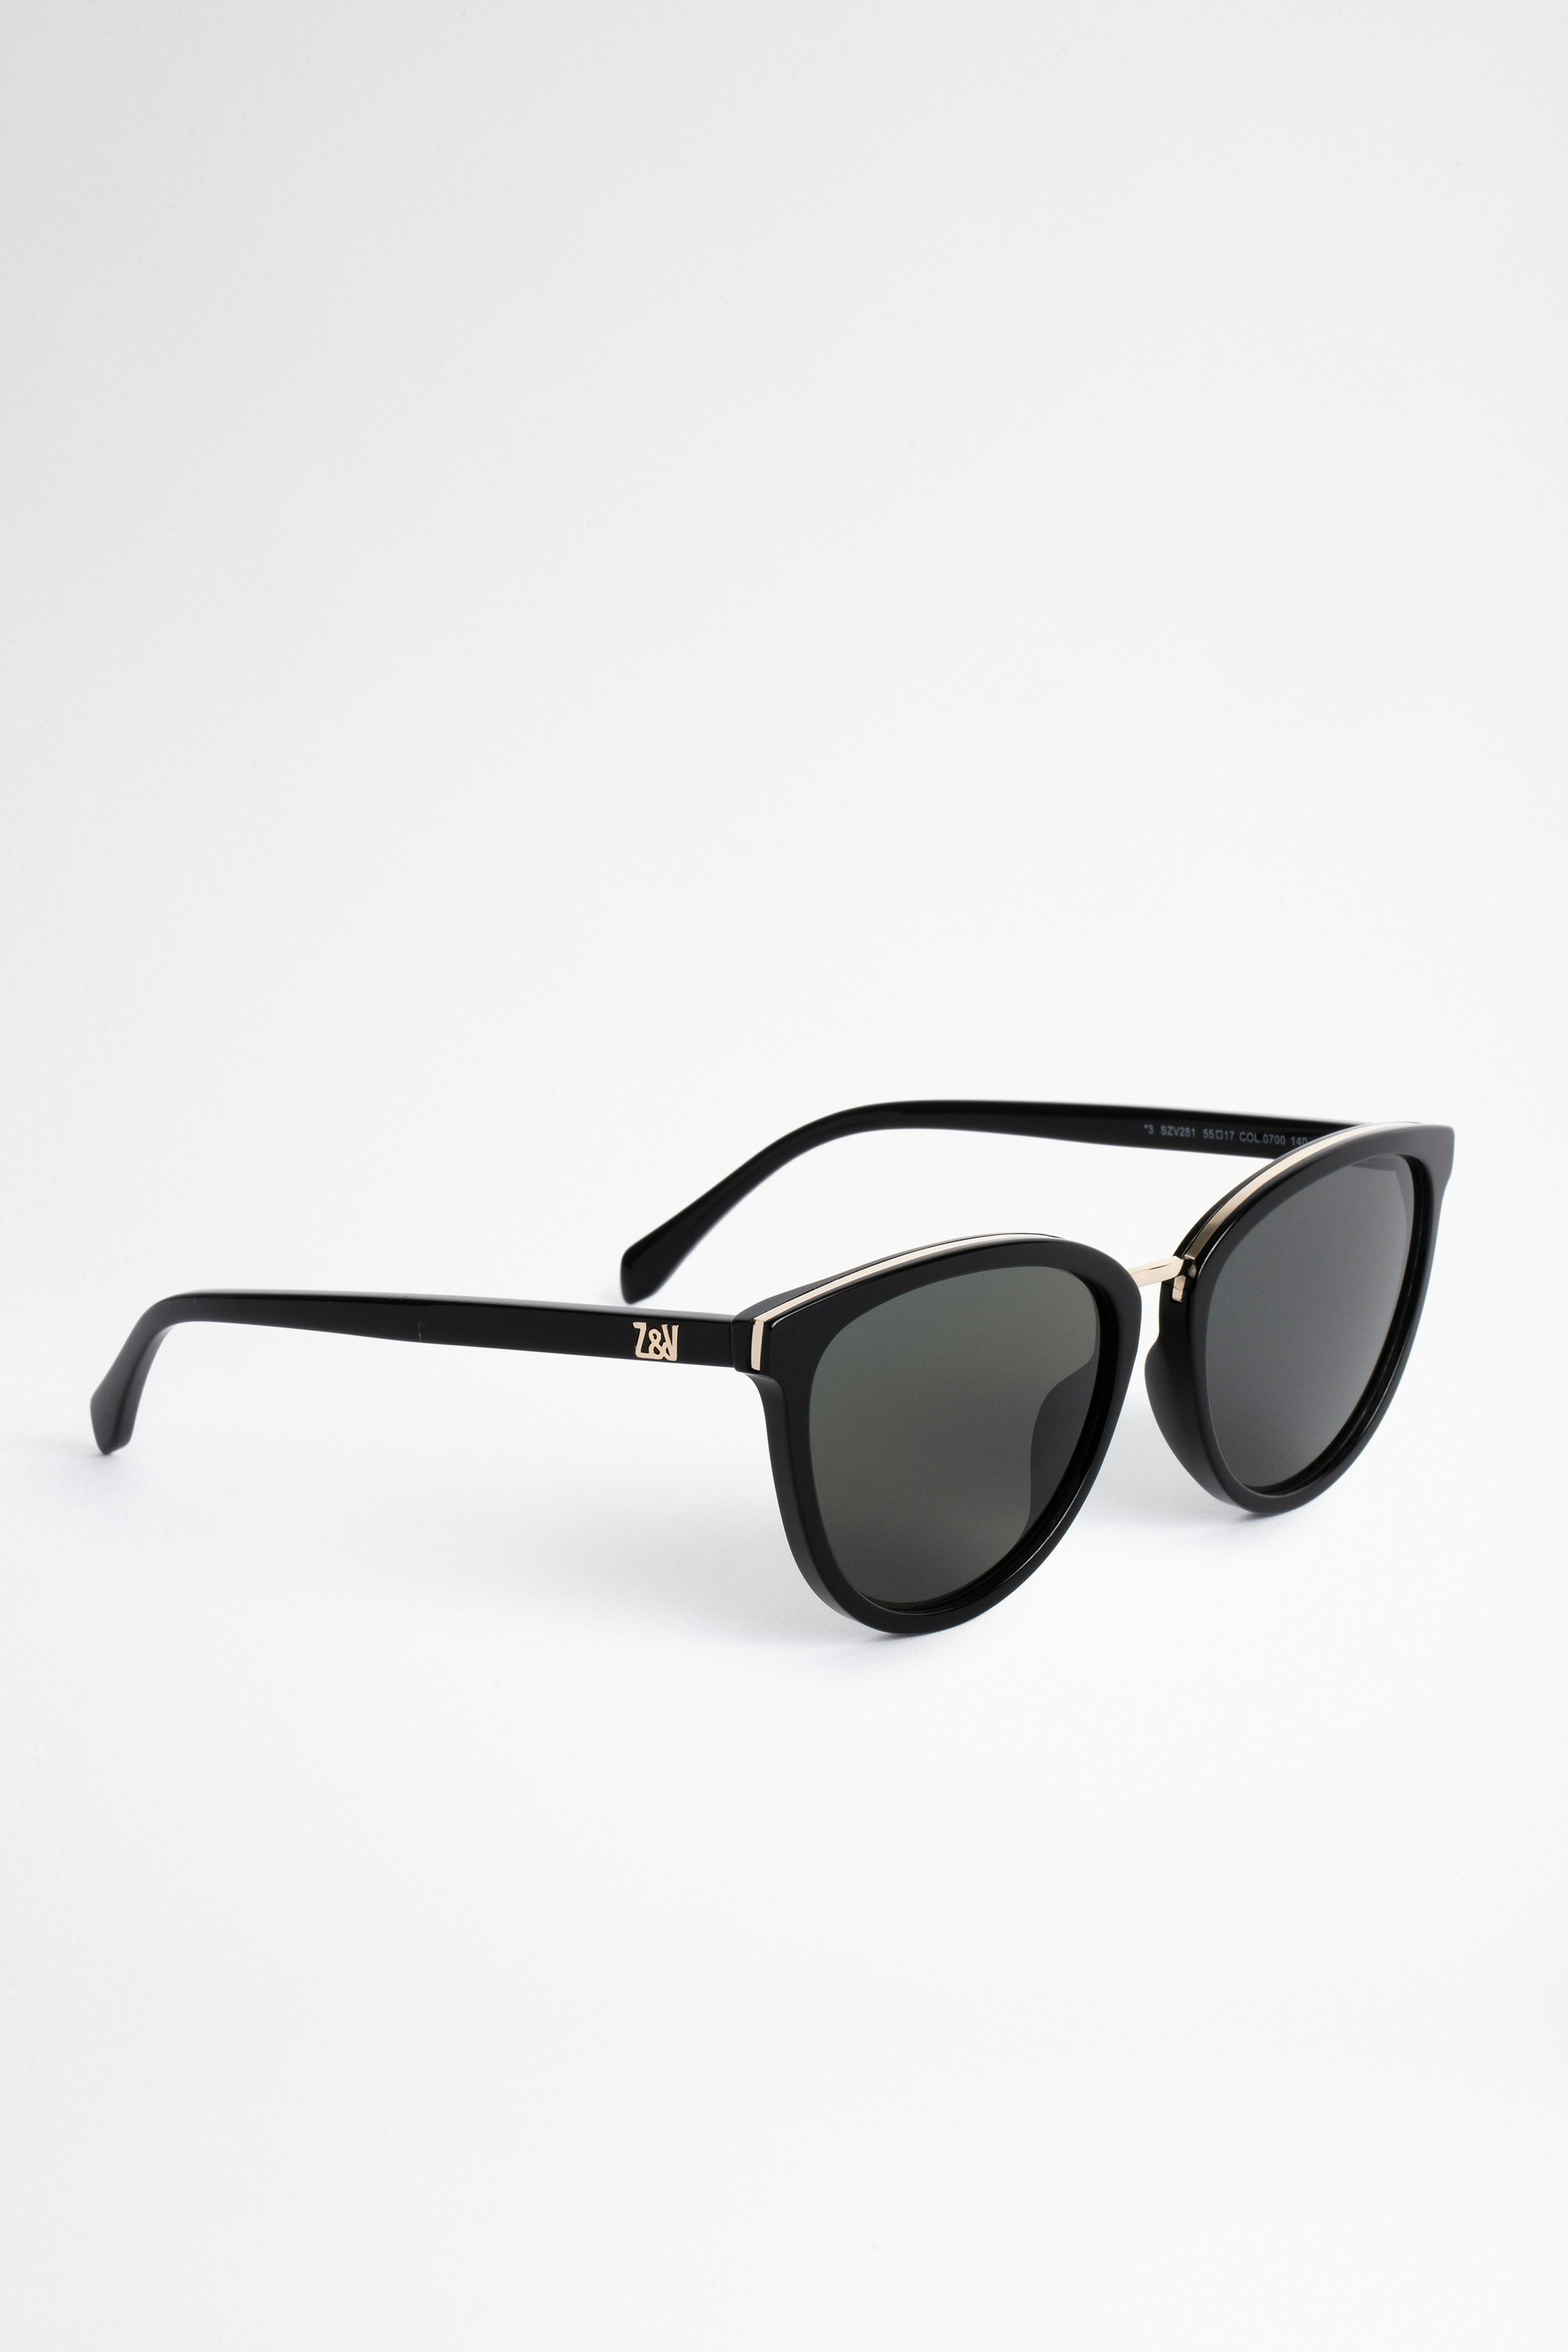 Sunglasses SZV281 Black sunglasses for women